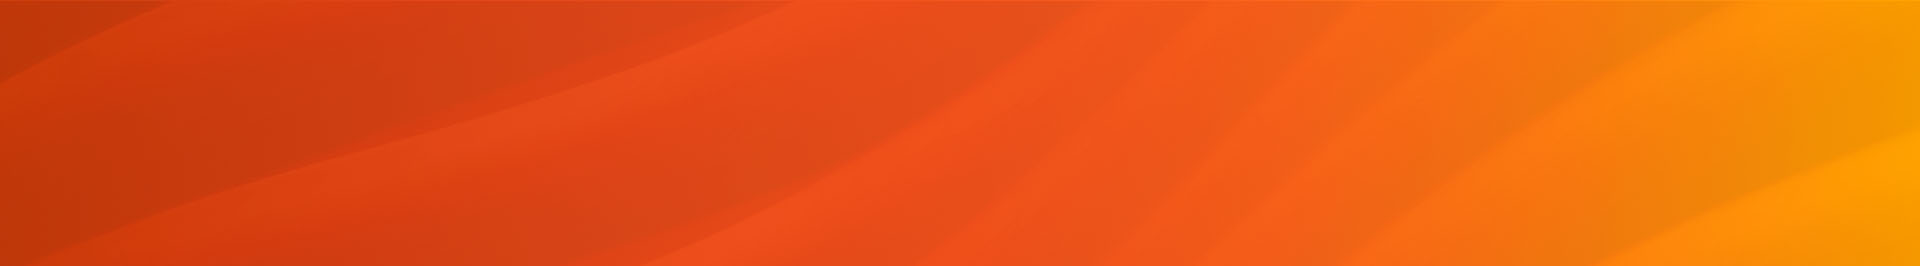 Red to Orange Decorative Background Image